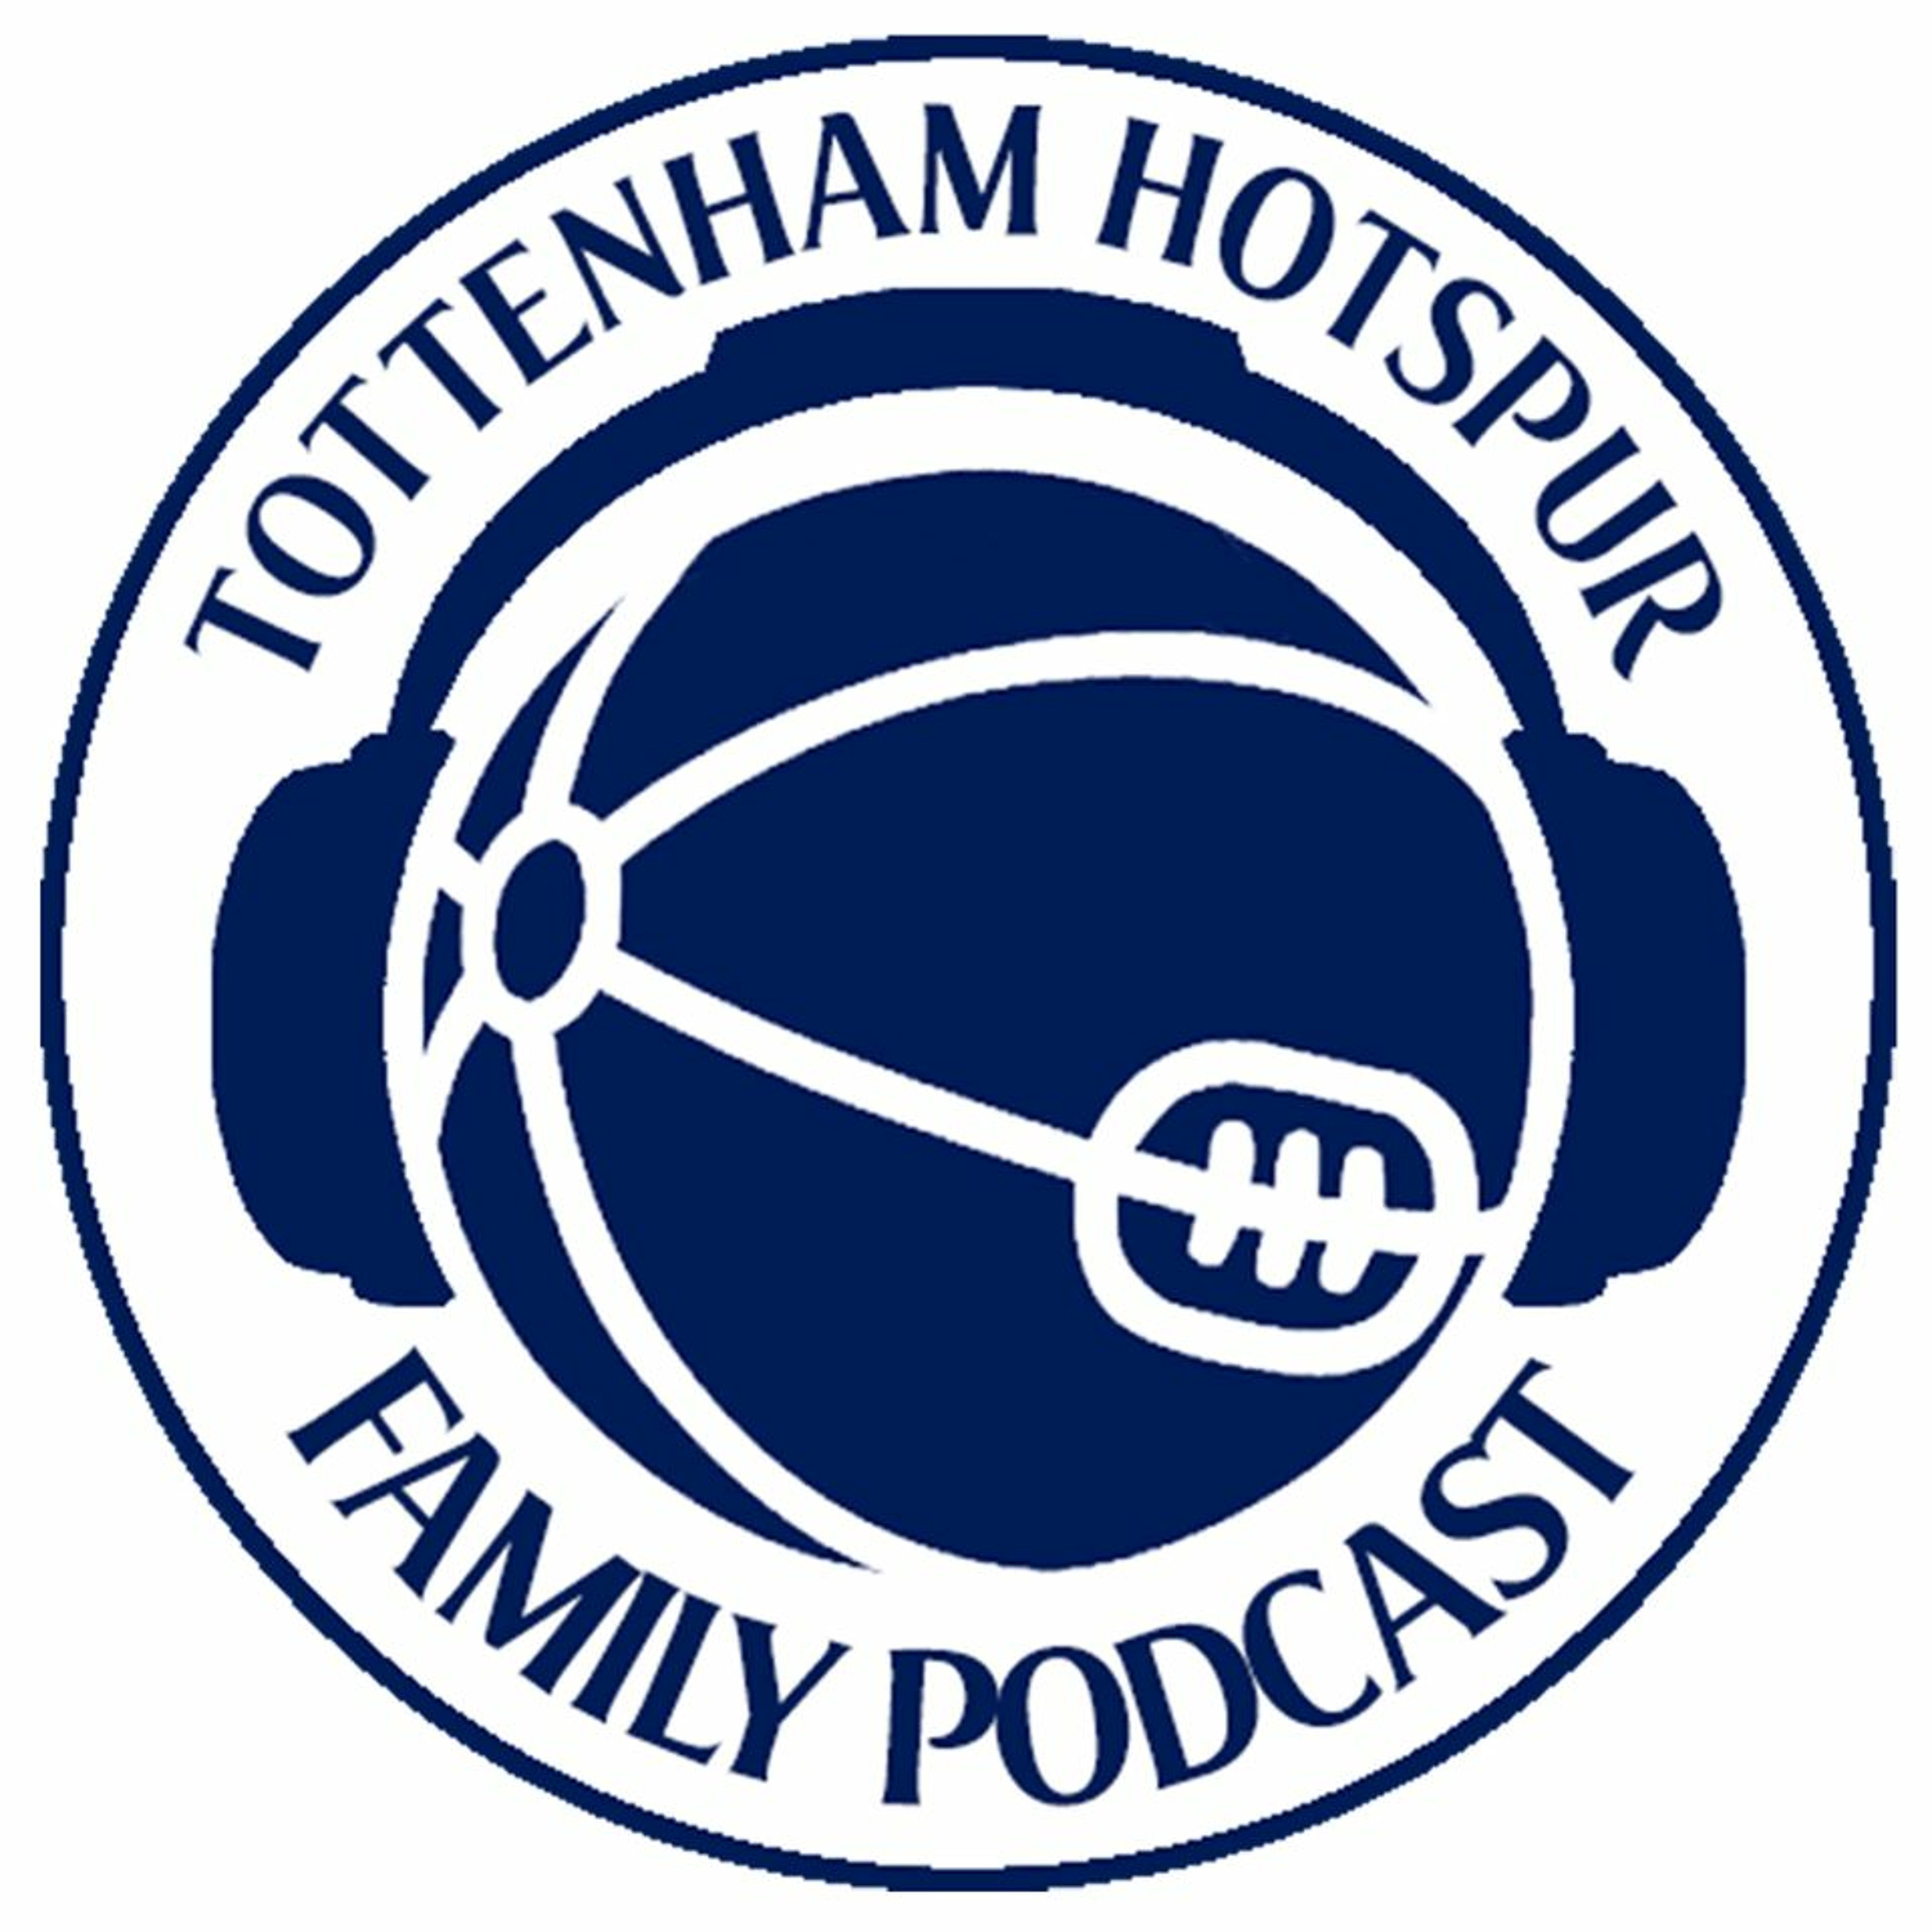 The Tottenham Hotspur Family Podcast - S5EP20 It’s pronounced Foyth, not Foyth